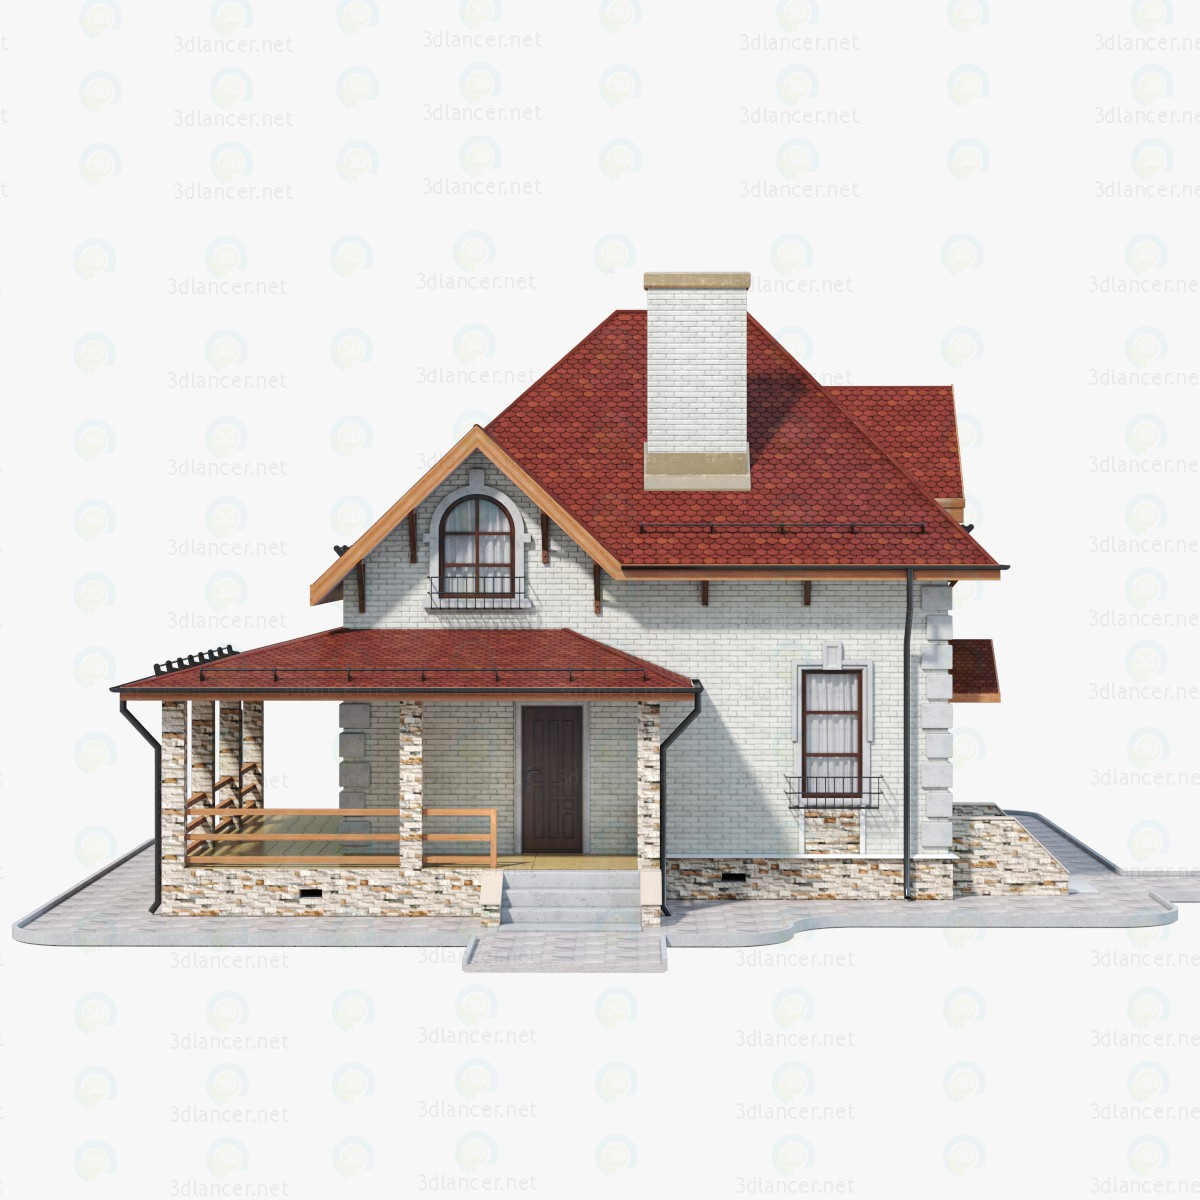 Casa ladrillo - 1 3D modelo Compro - render